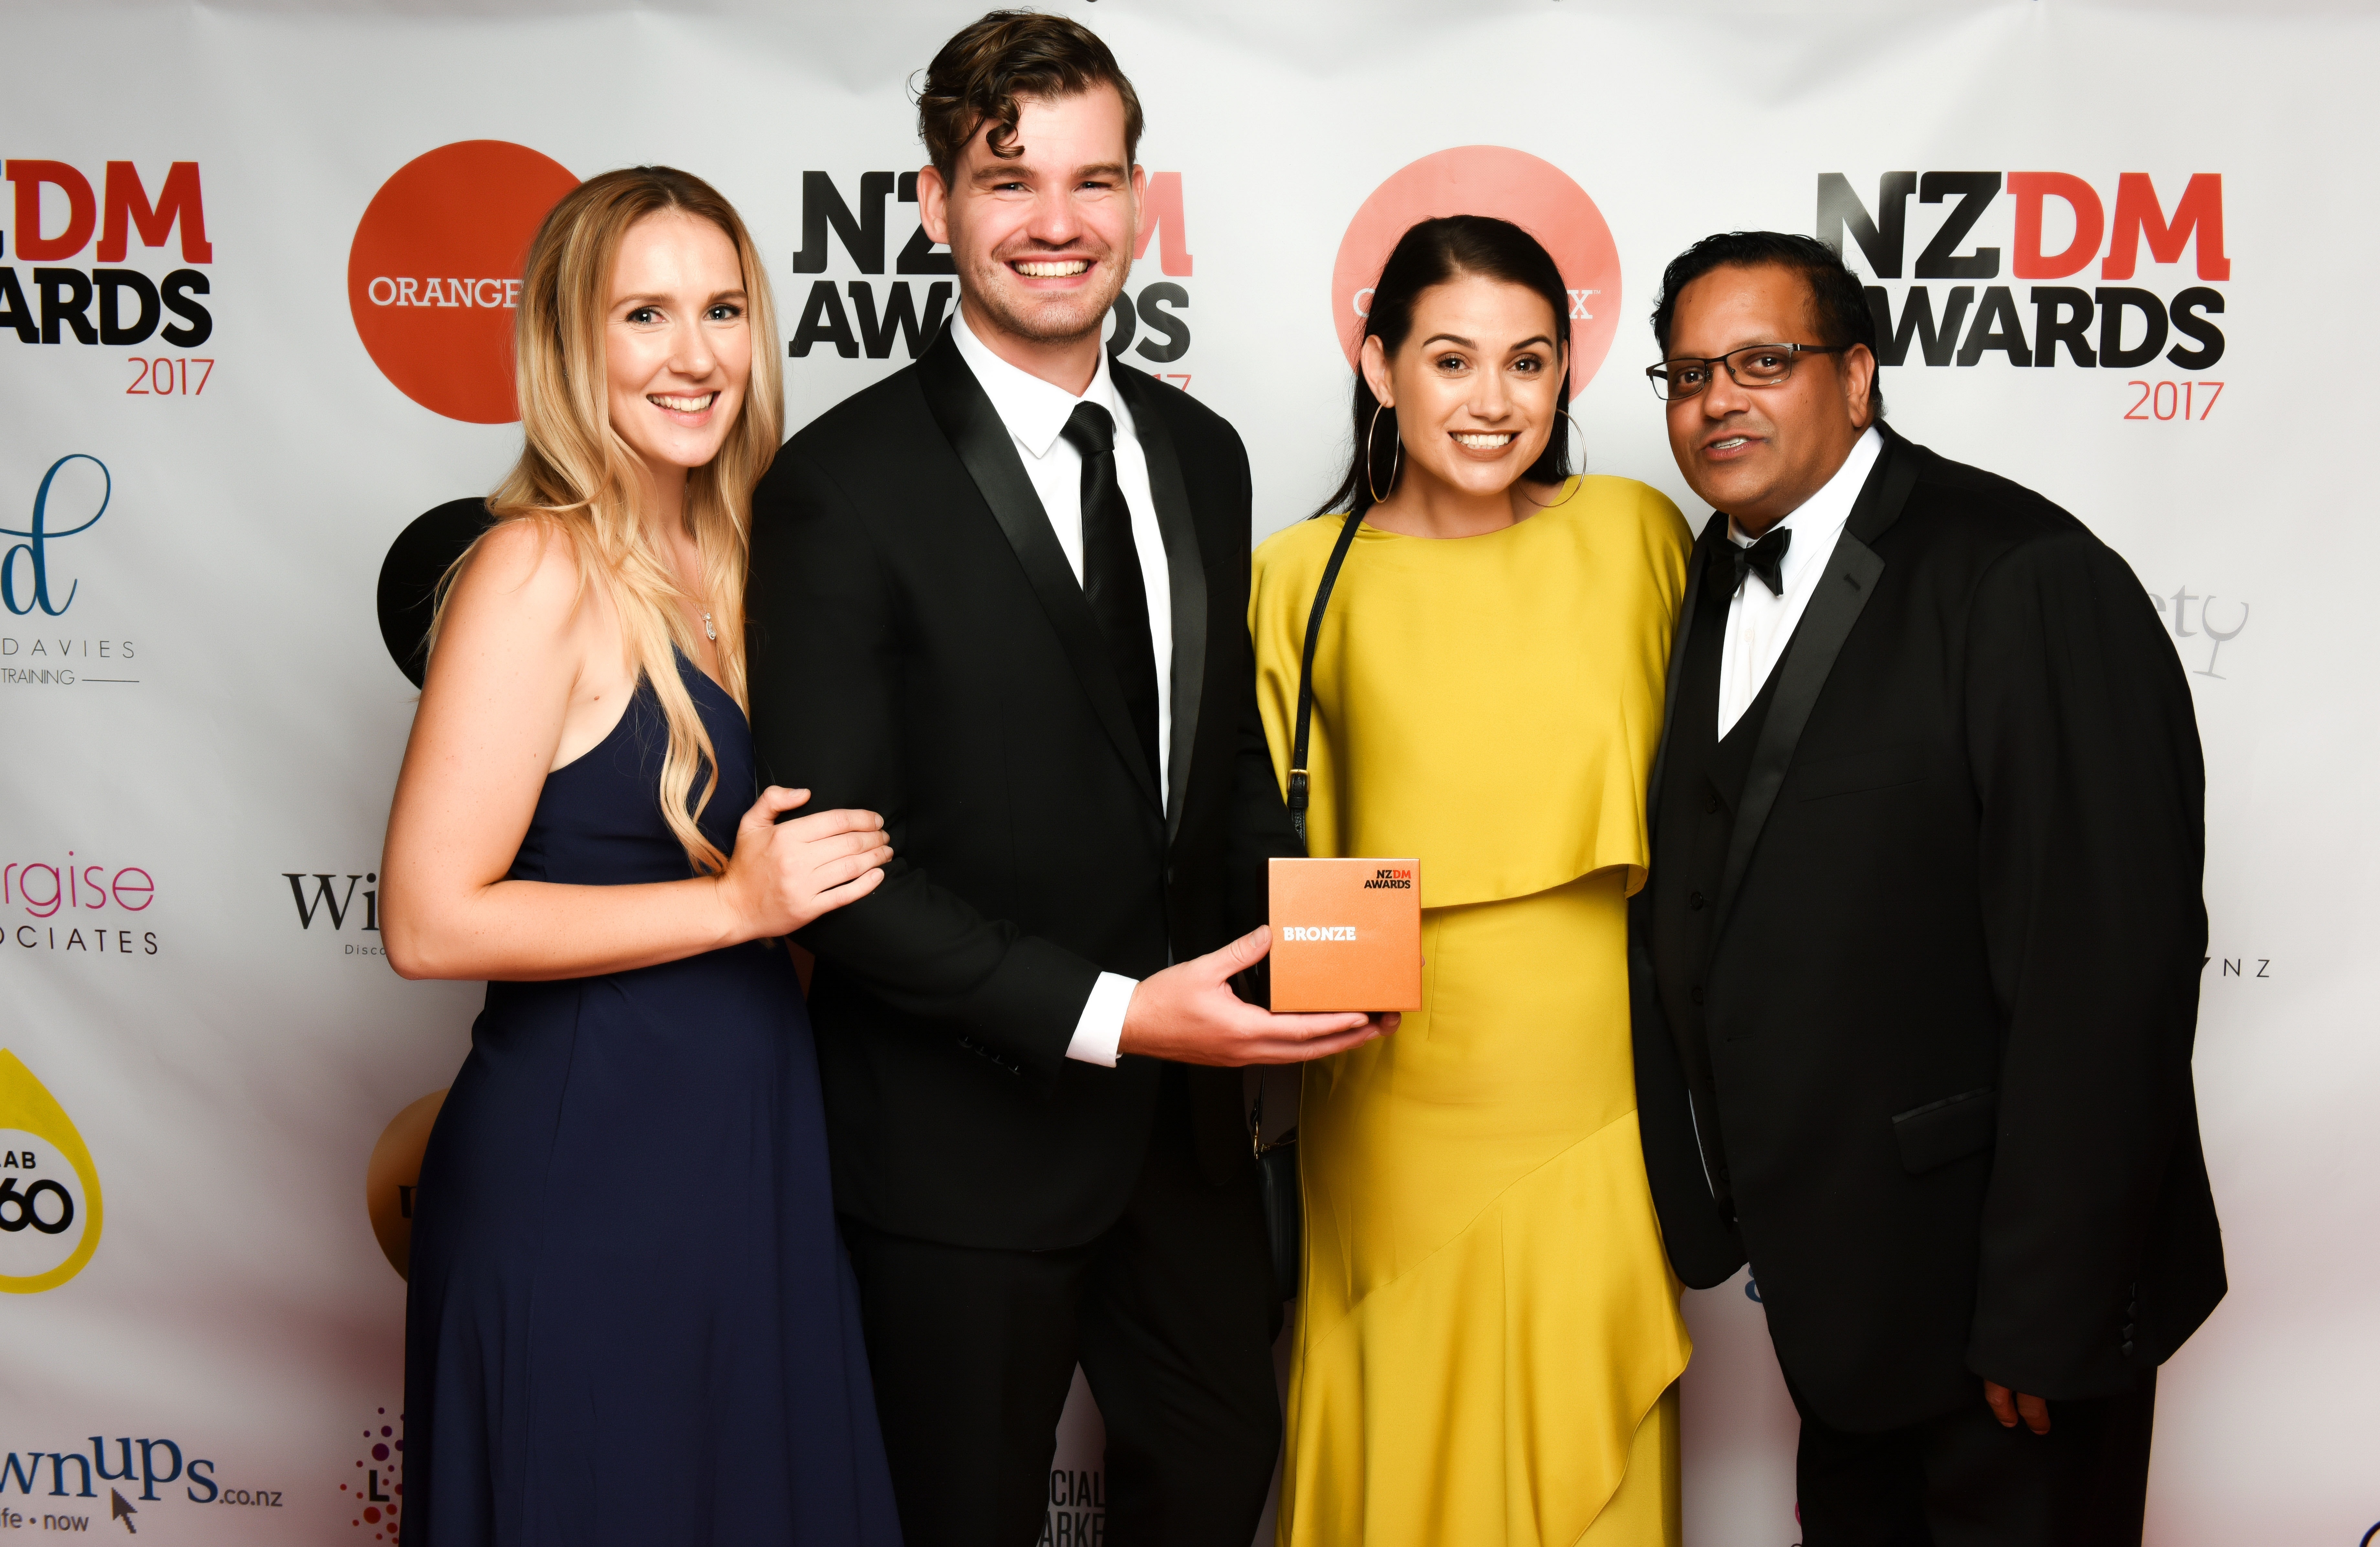 V86 wins bronze at the New Zealand Direct Marketing awards